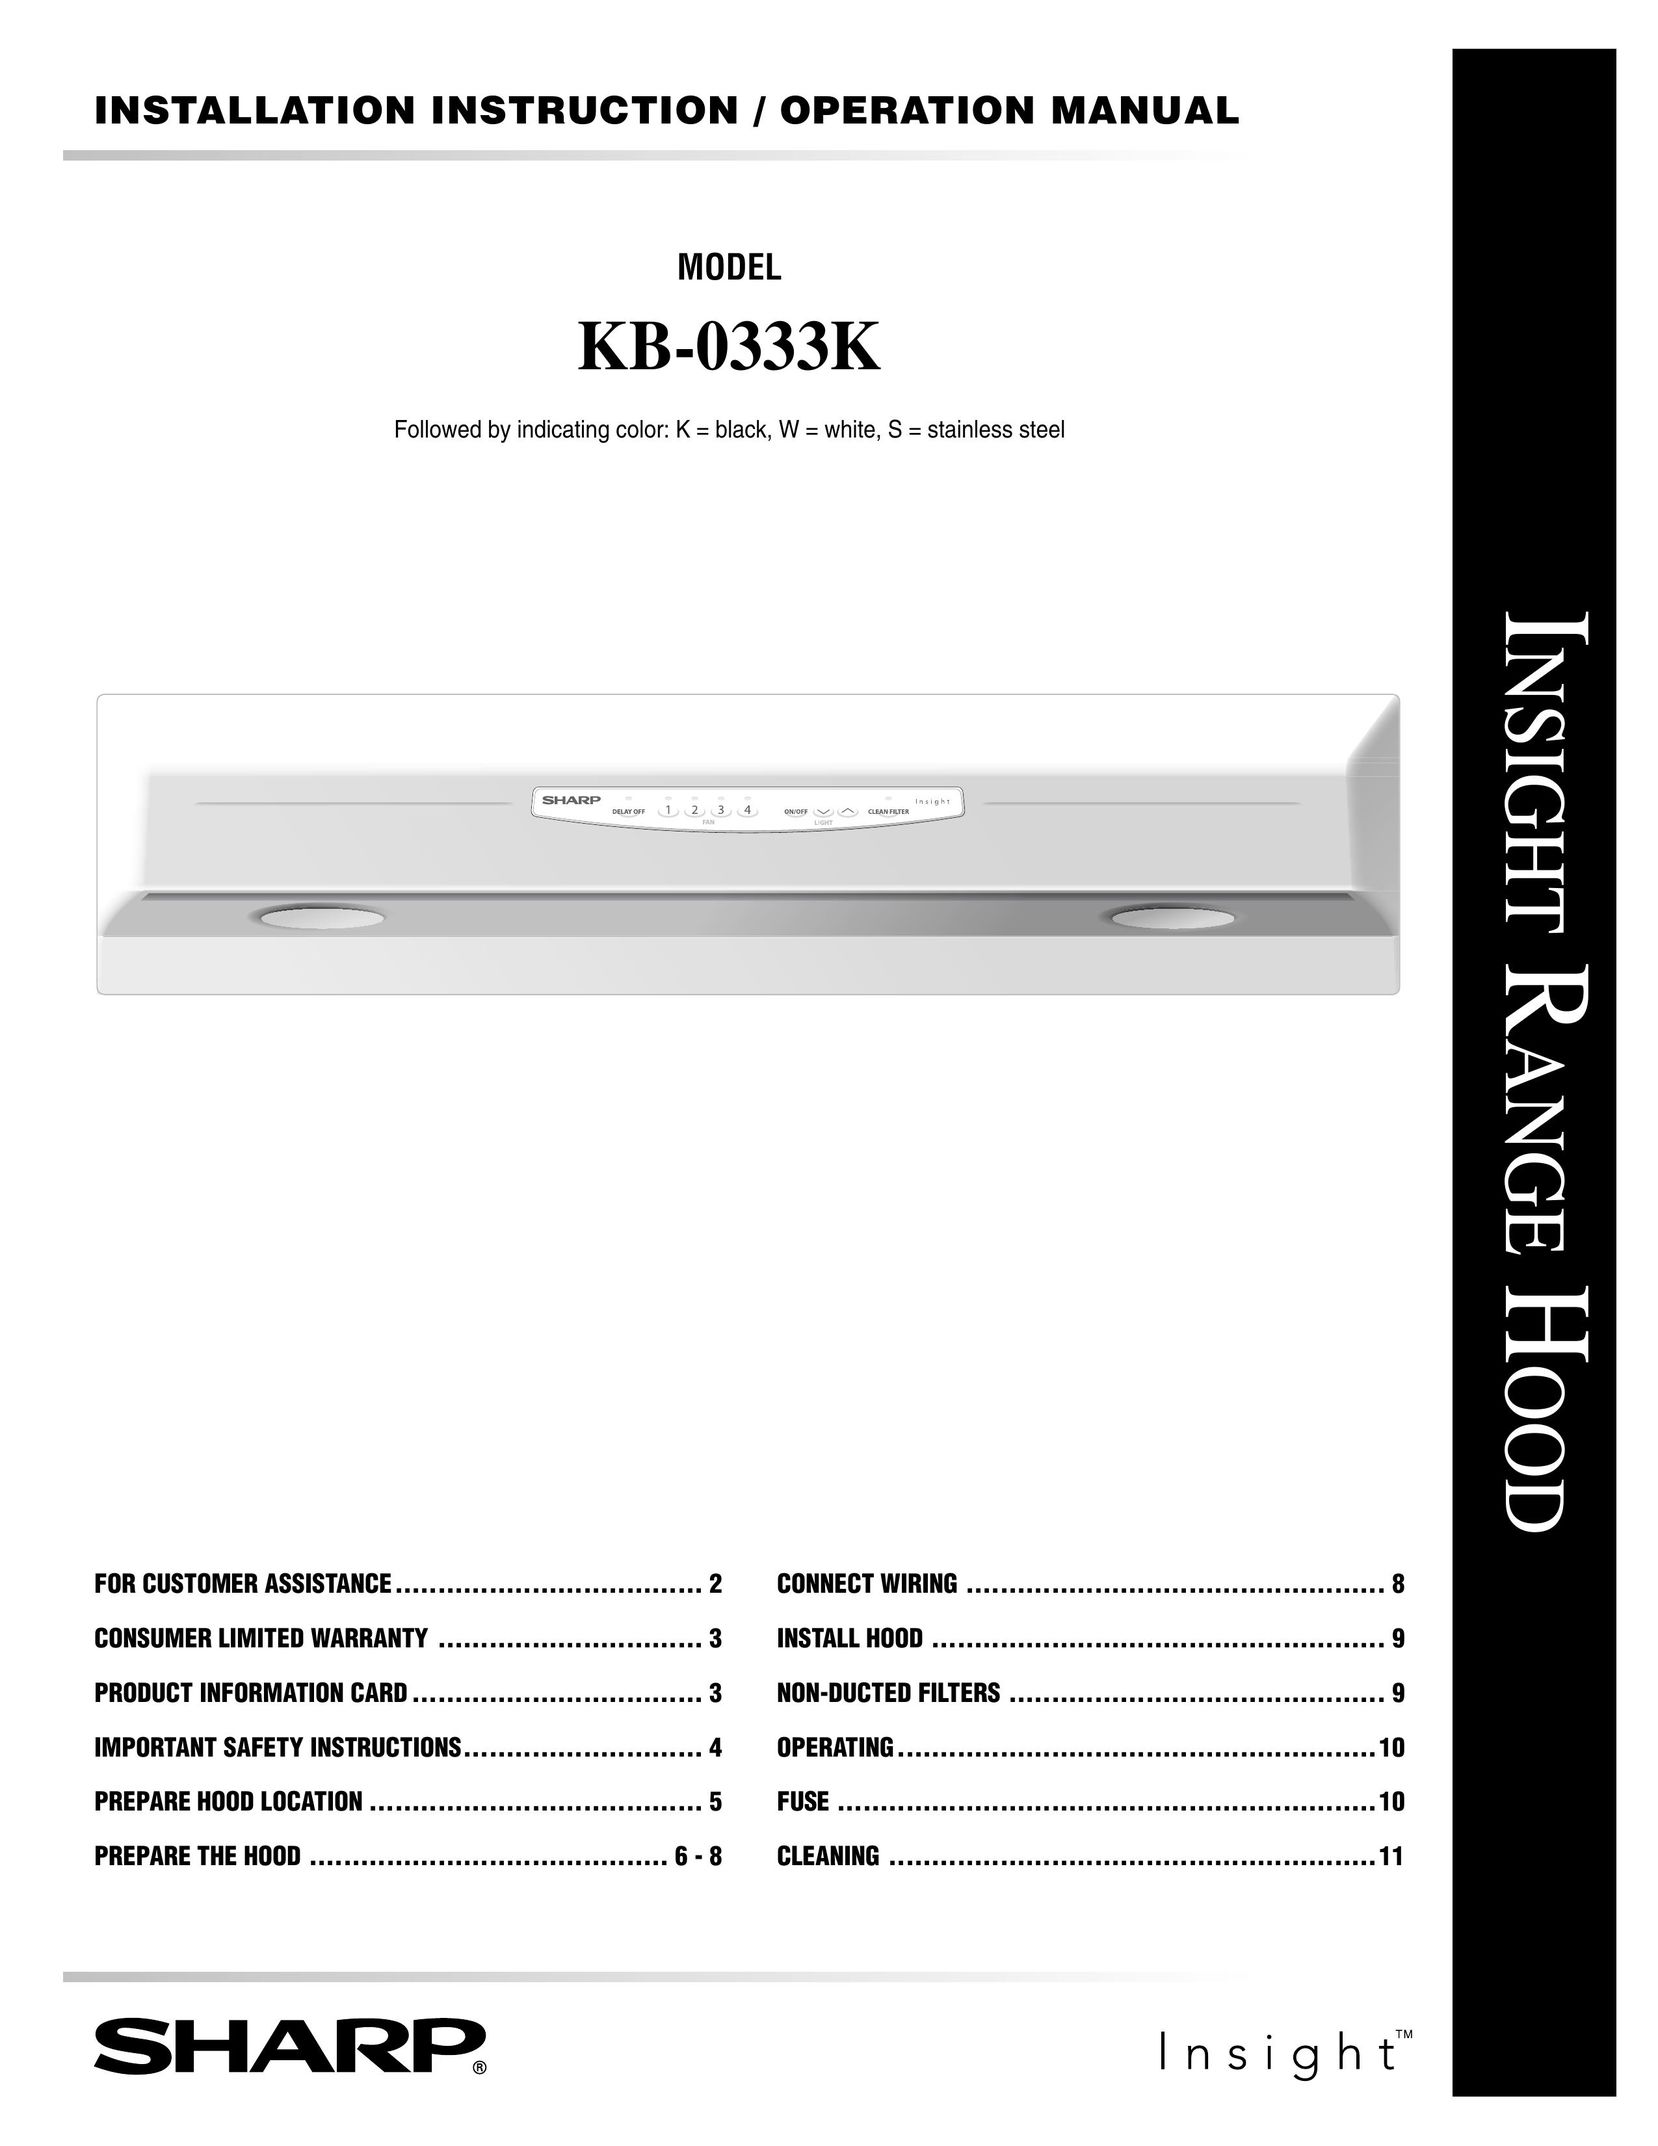 Sharp KB-0333K Home Security System User Manual